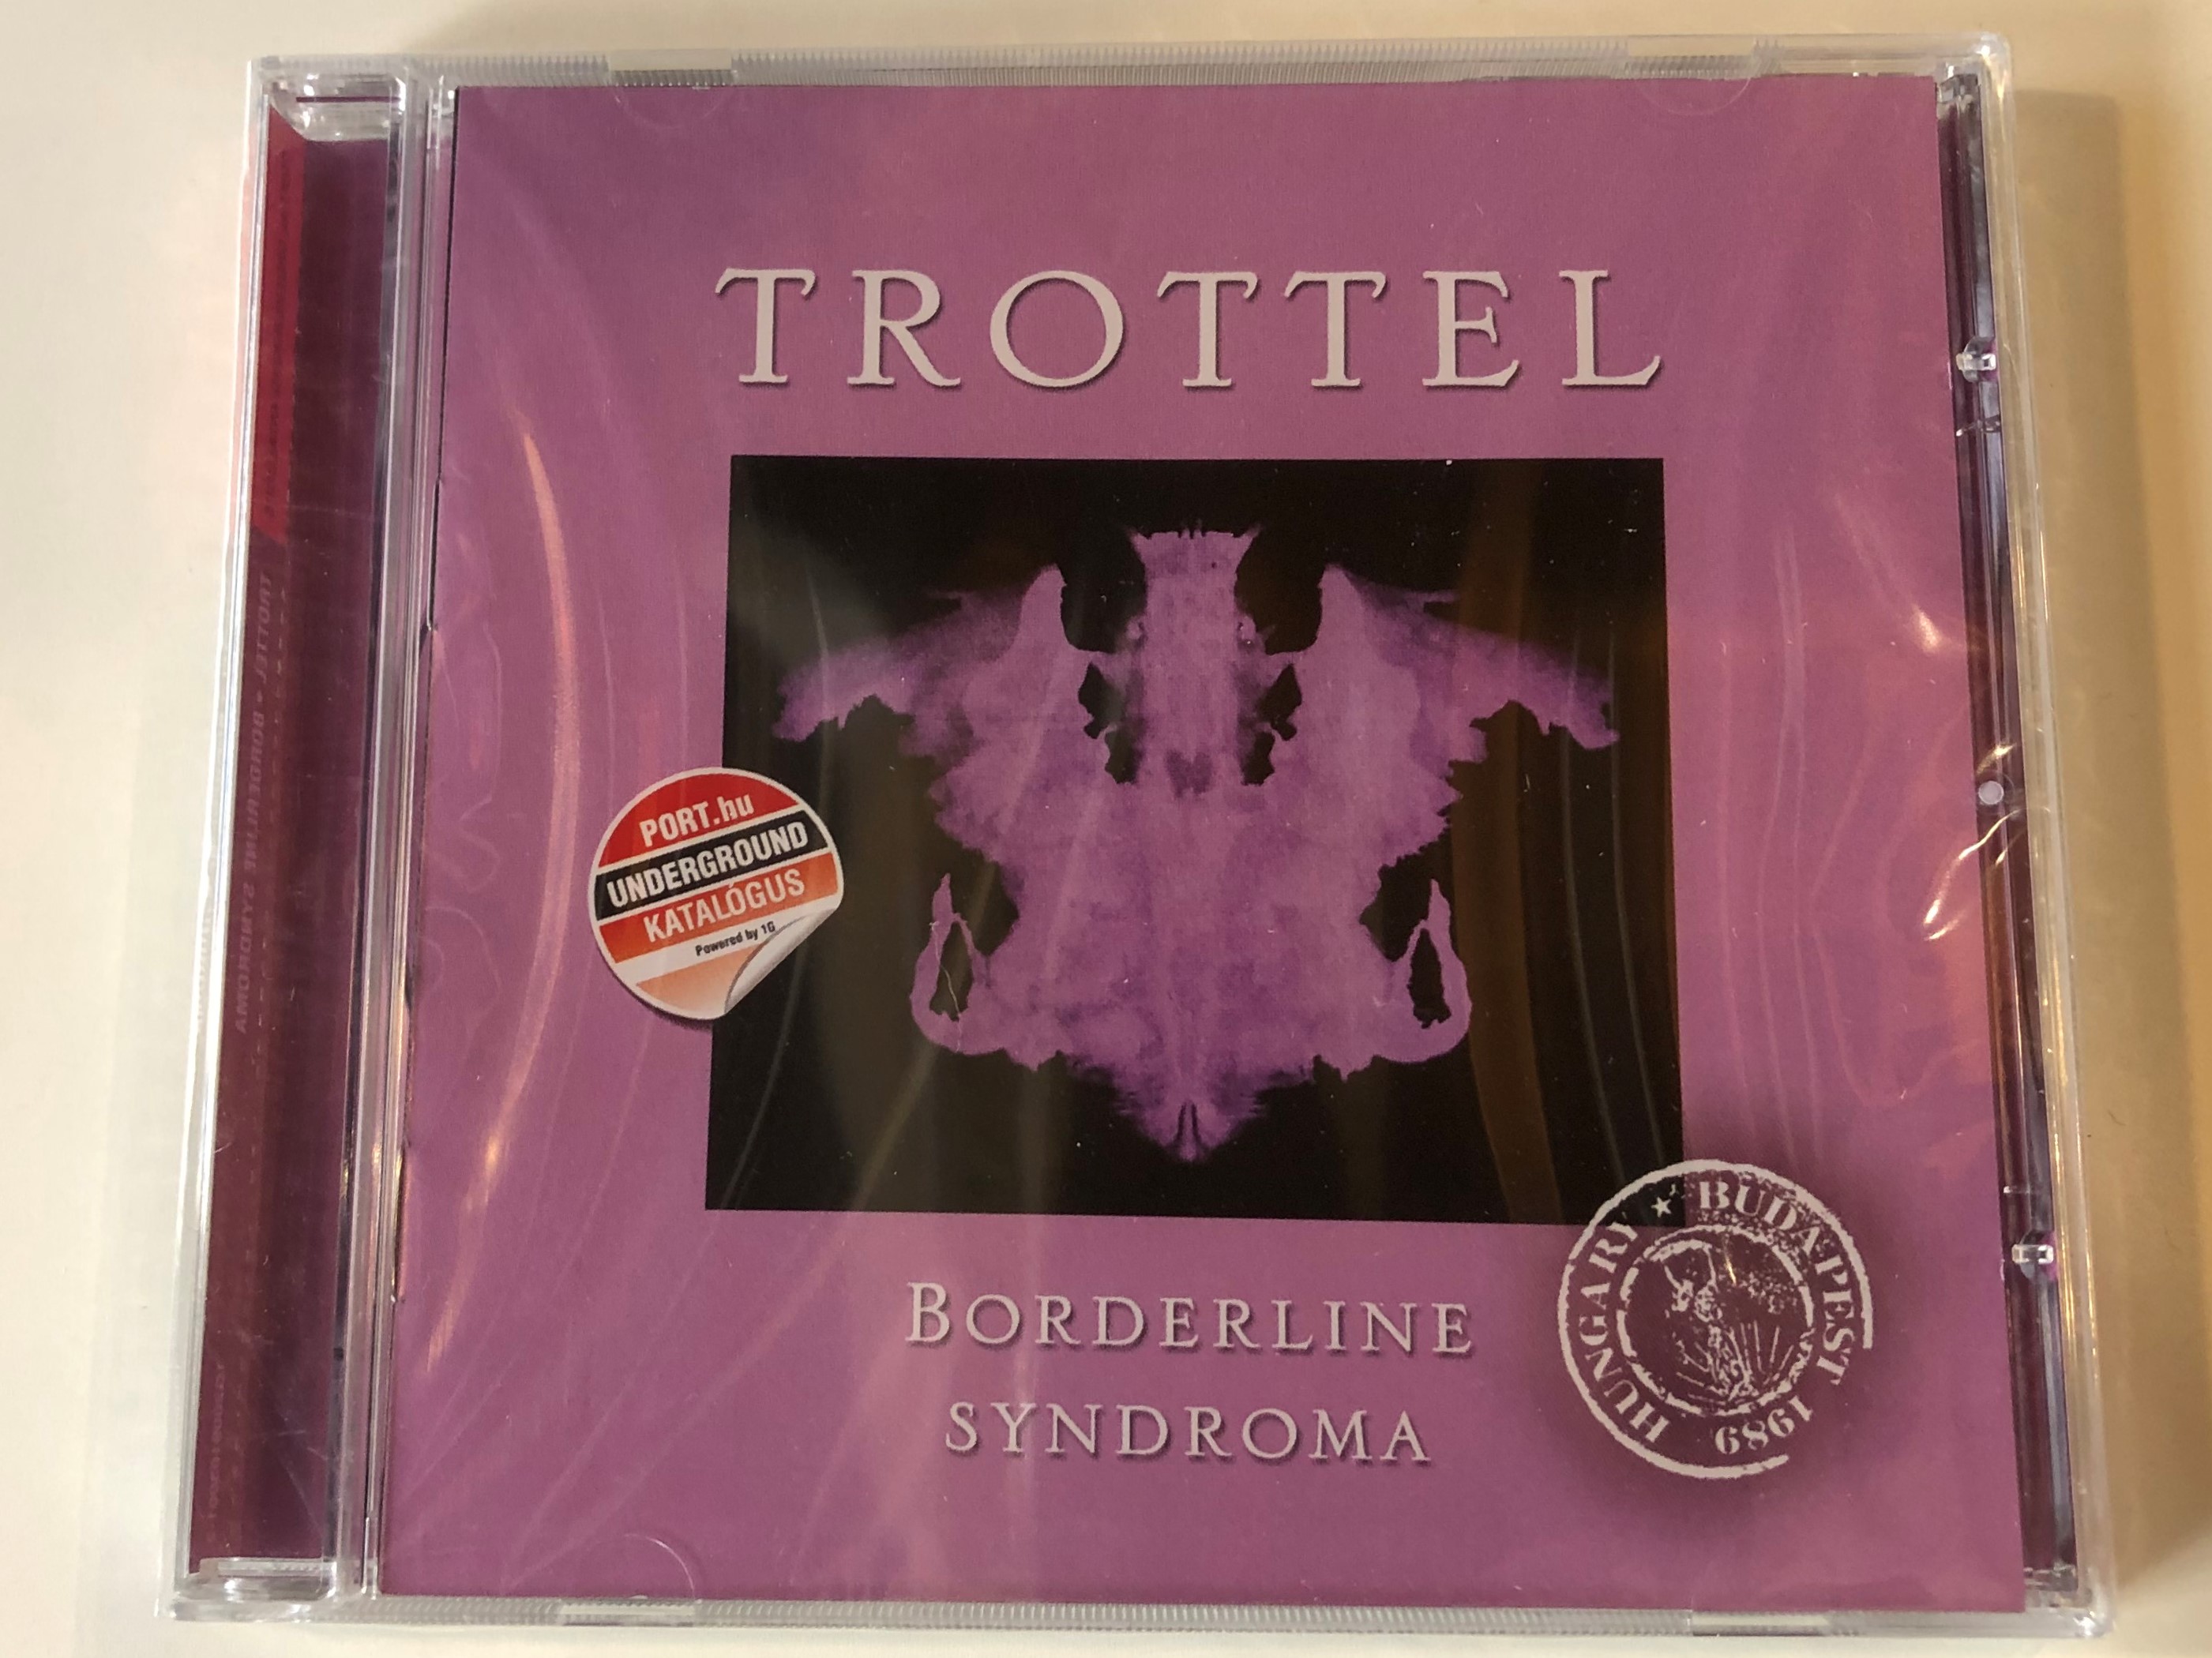 trottel-borderline-syndroma-port.hu-underground-katal-gus-1g-records-audio-cd-2009-1g2009103001-2-1-.jpg